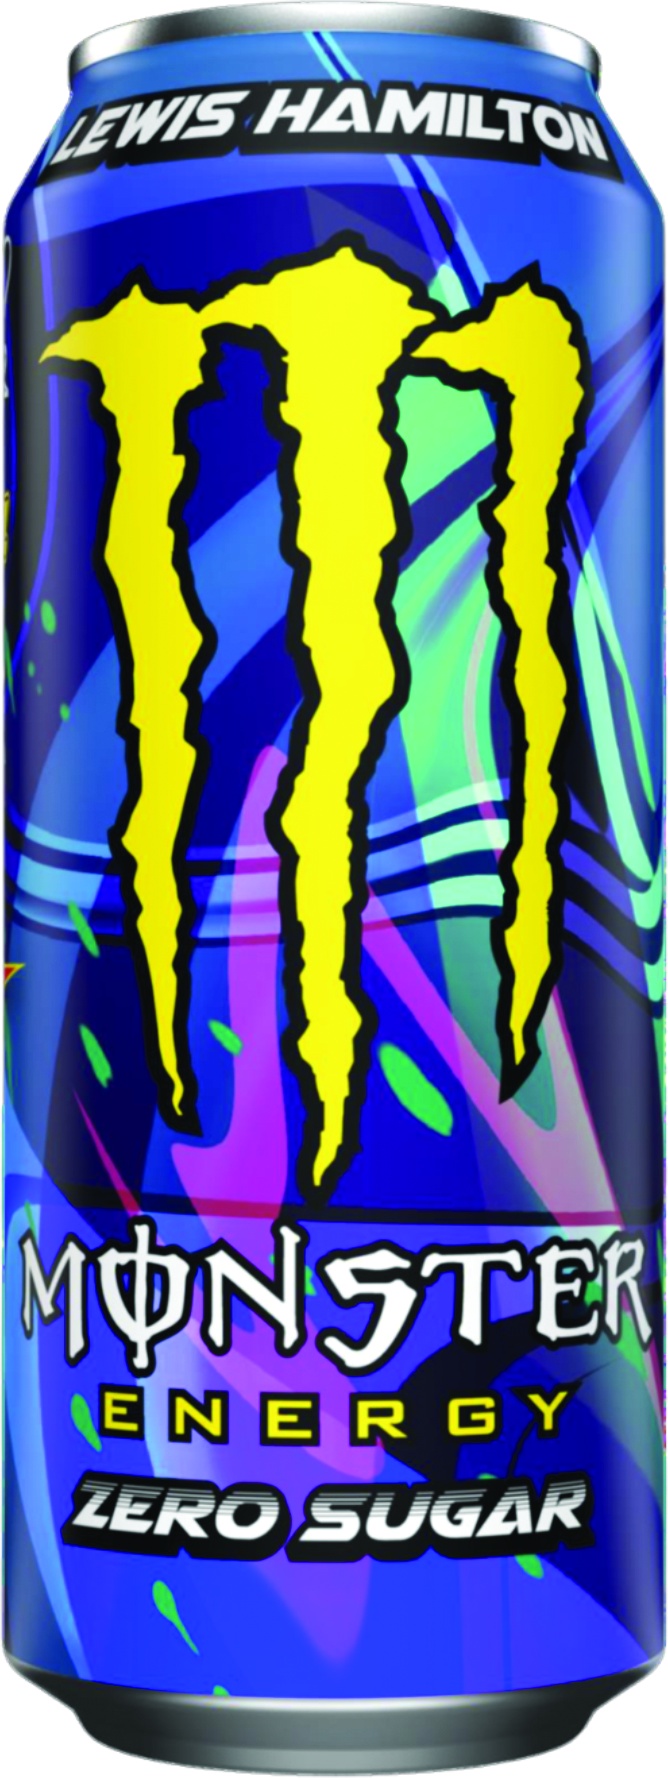 Slika za Energetsko piće lewis hamilton  Monster 0.5l